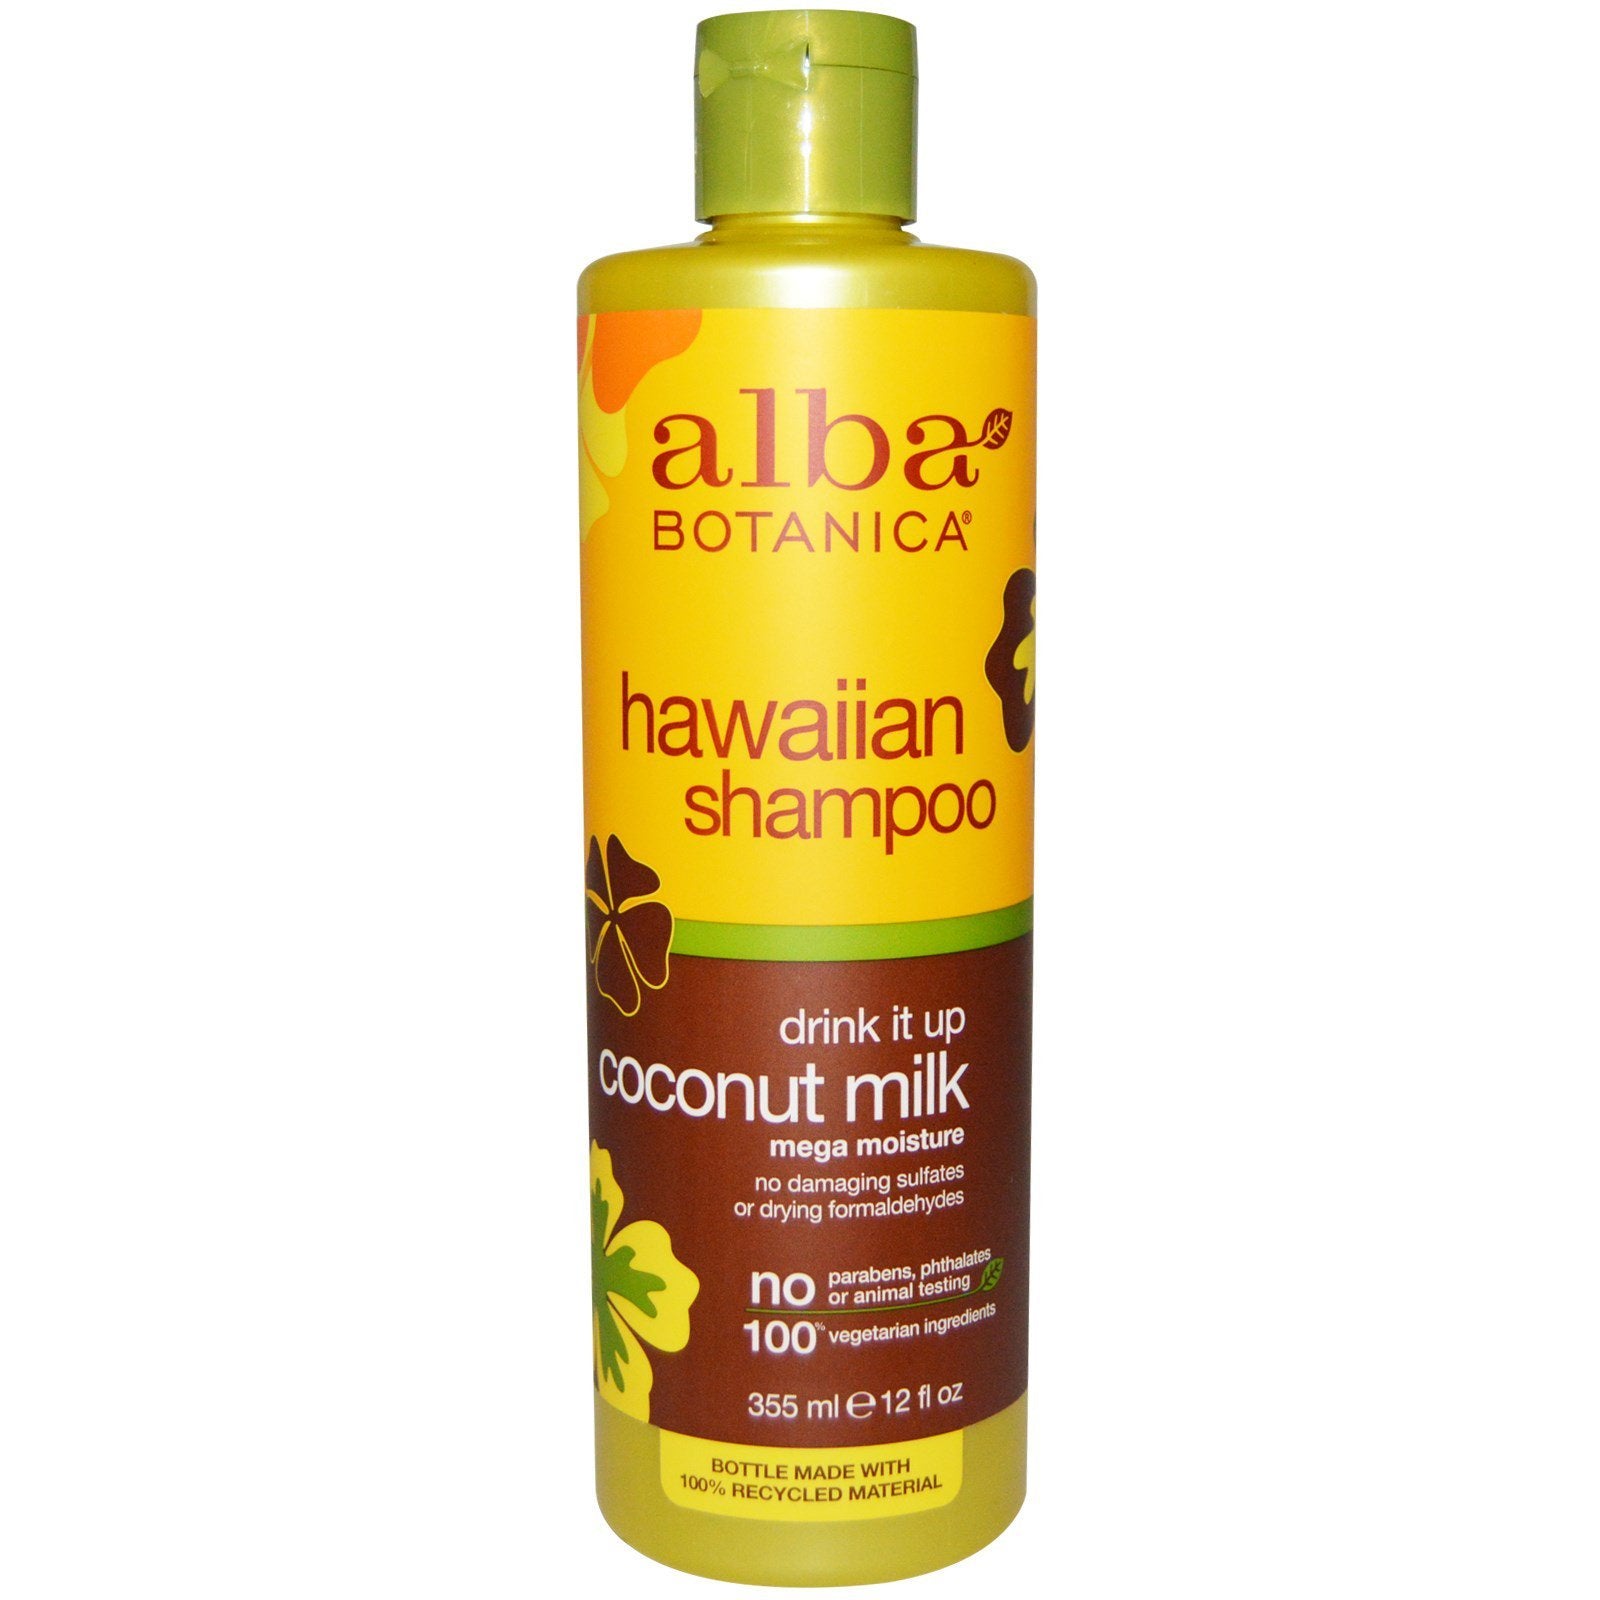 Alba Botanica, Drink it Up Coconut Milk Shampoo, 12 fl oz (355 ml)